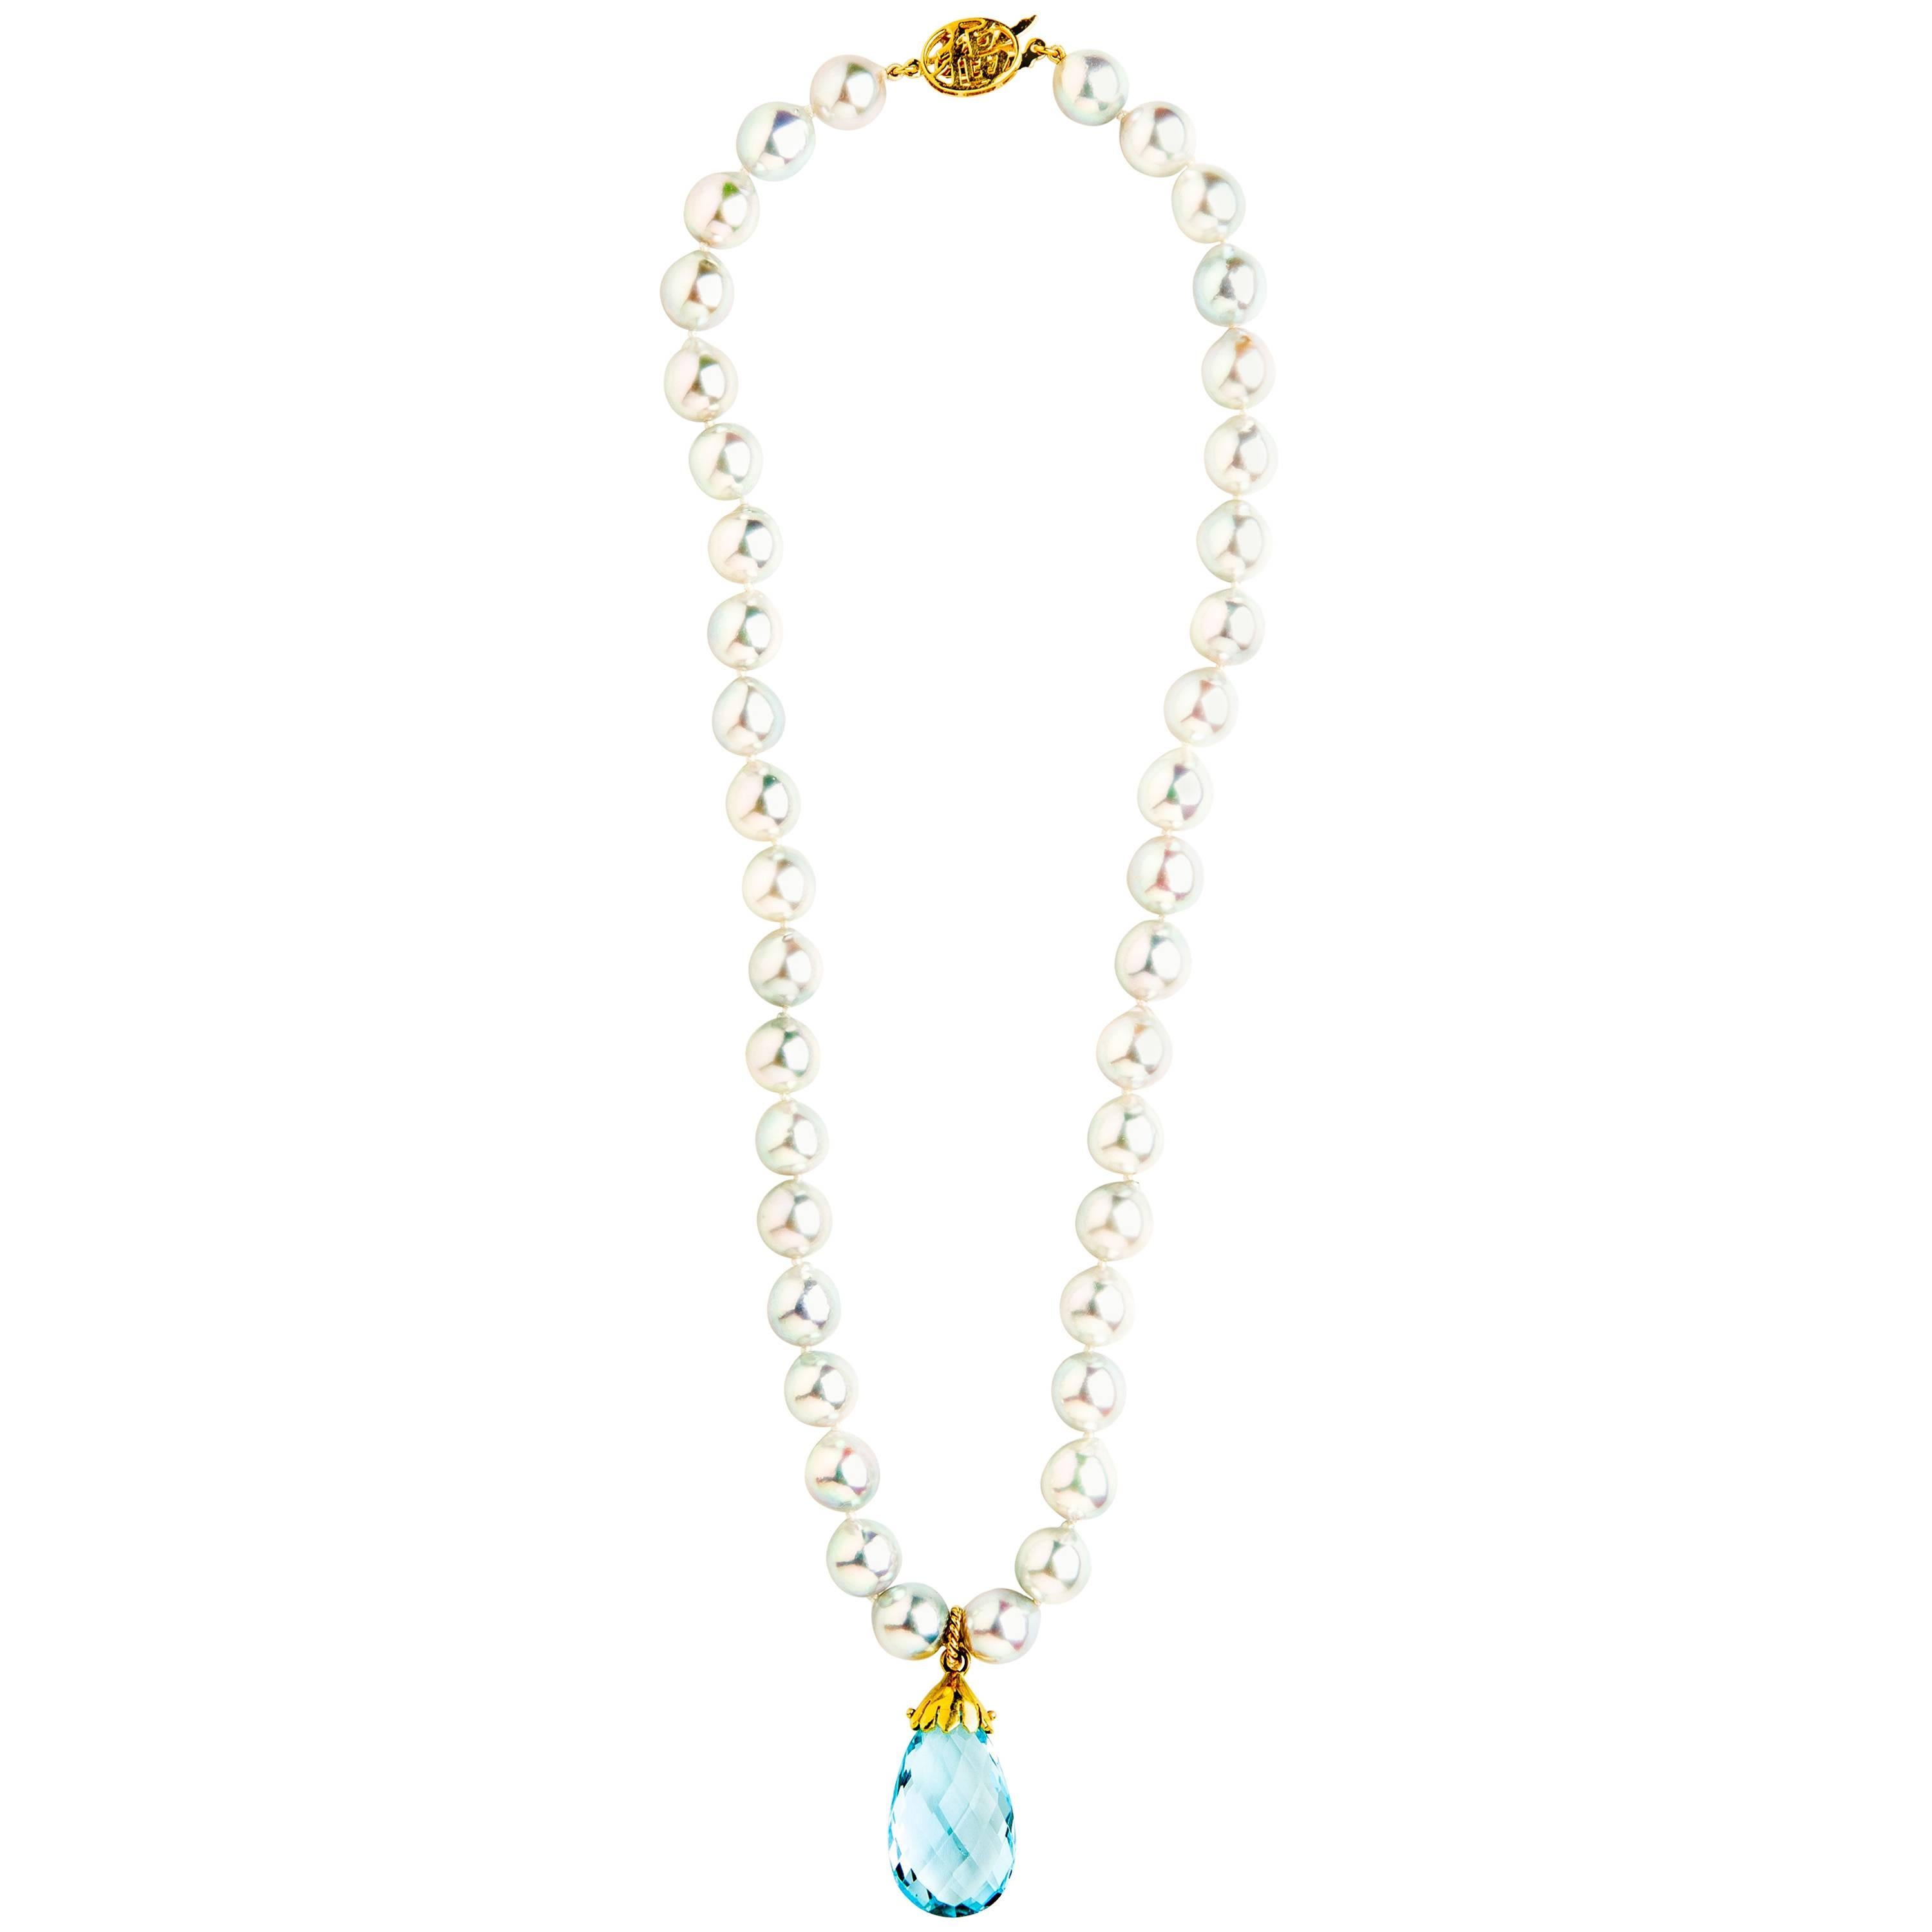 Blue topaz pendant with Blue Akoya Japanese Pearls.